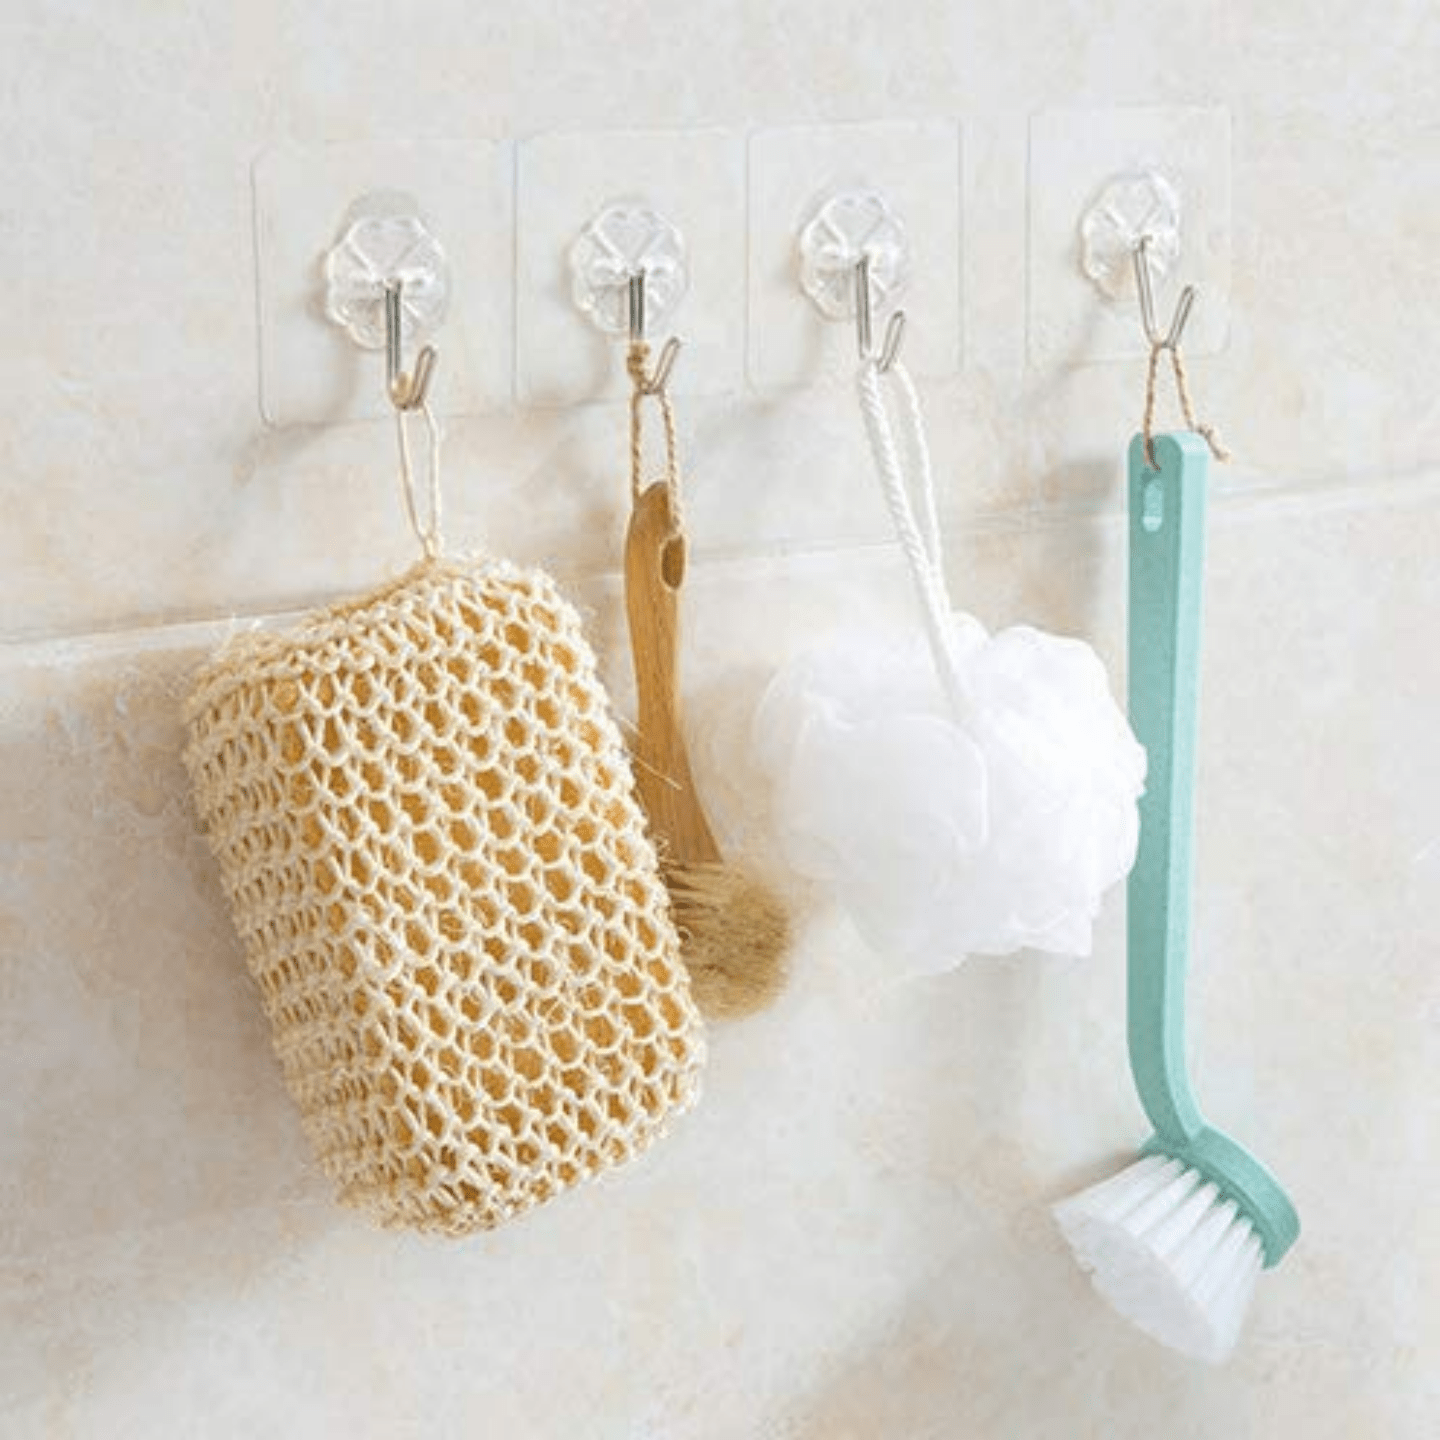 Self Adhesive Wall Hooks  Hangers for Hanging Robe, Coat, Towel, Keys, Bags etc